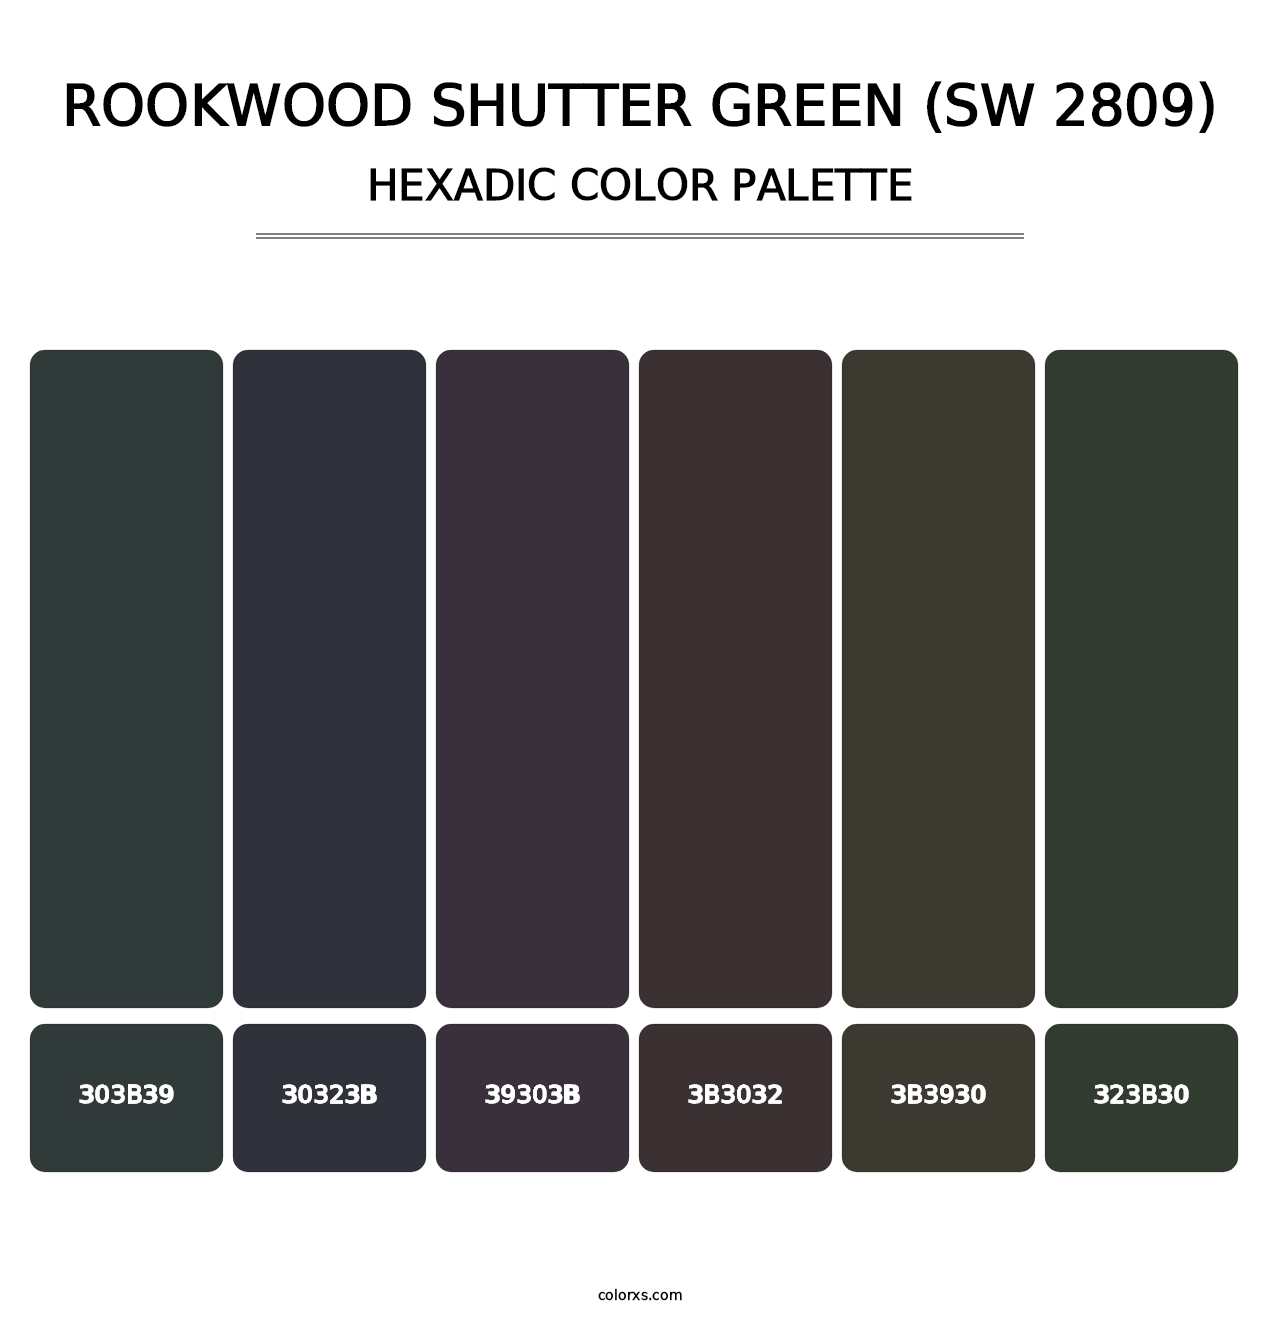 Rookwood Shutter Green (SW 2809) - Hexadic Color Palette